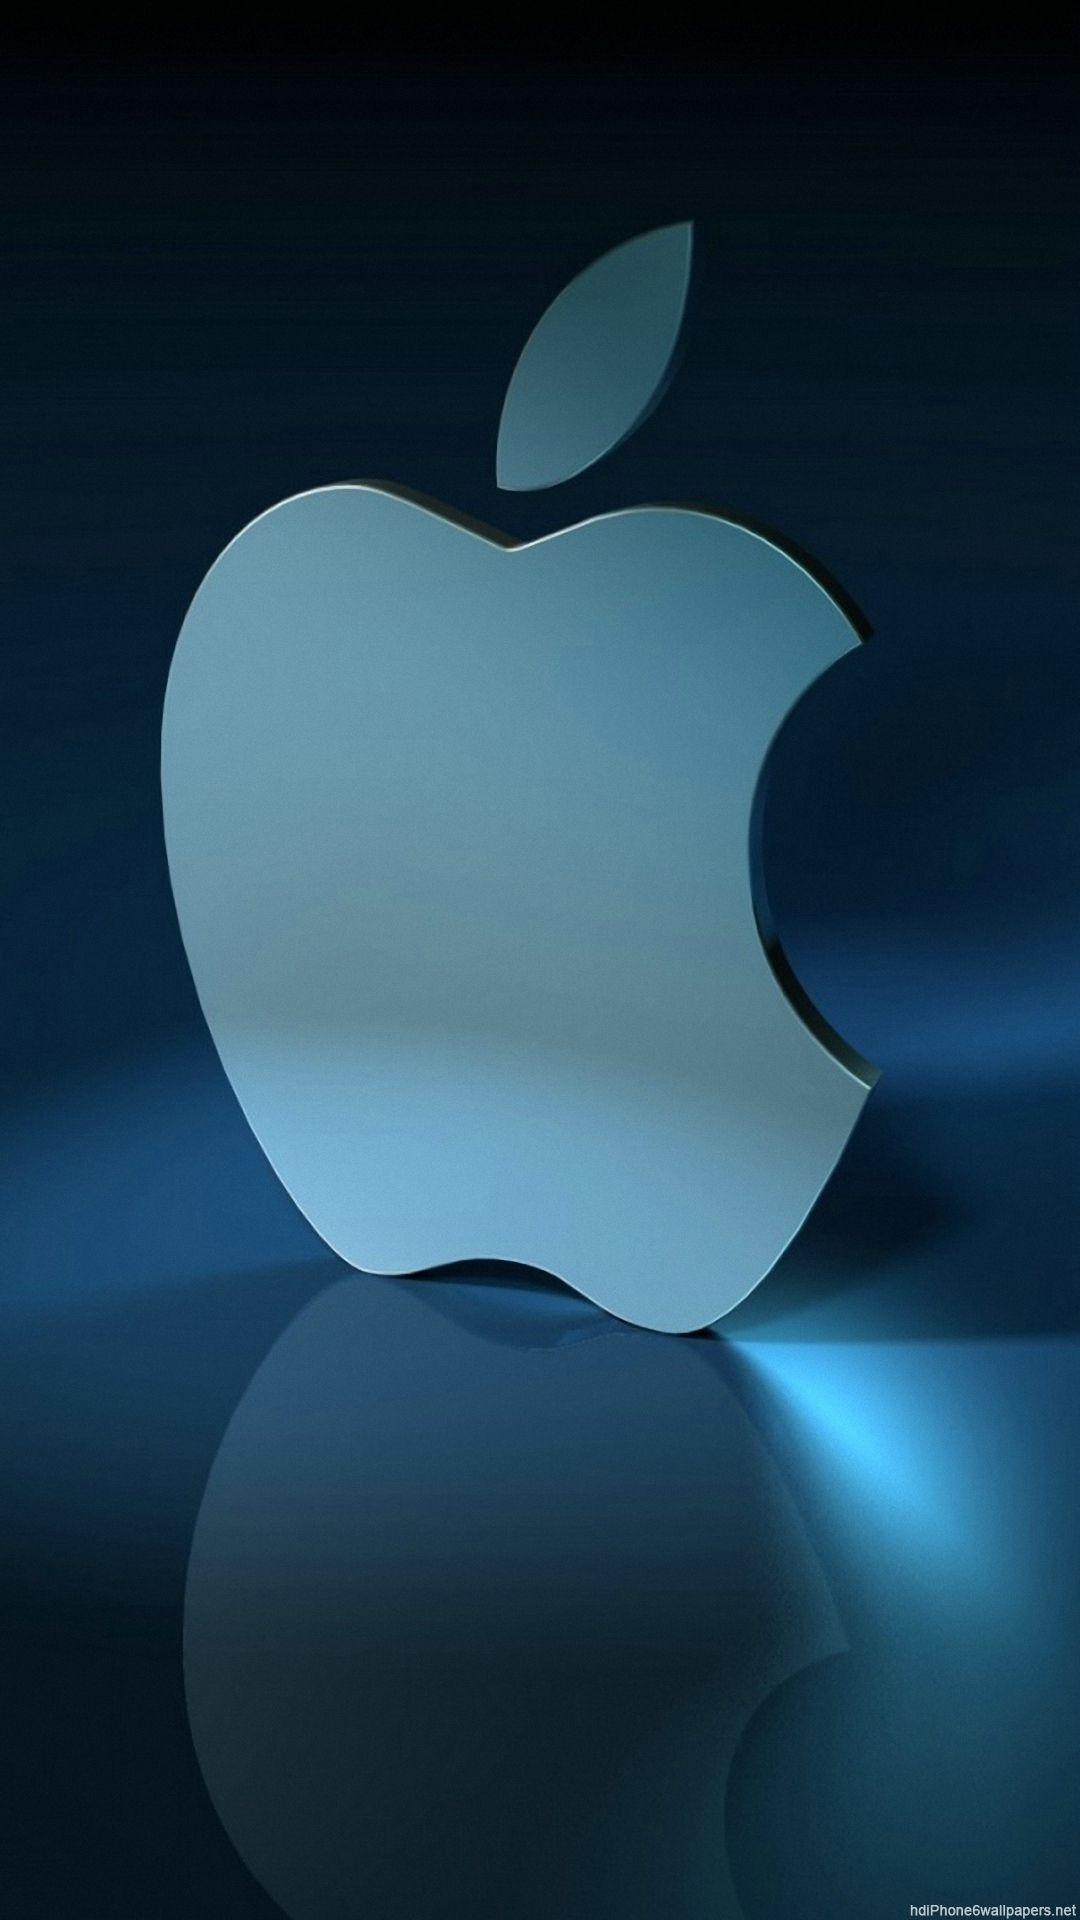 Apple iPhone HD Wallpapers - Top Free Apple iPhone HD ...